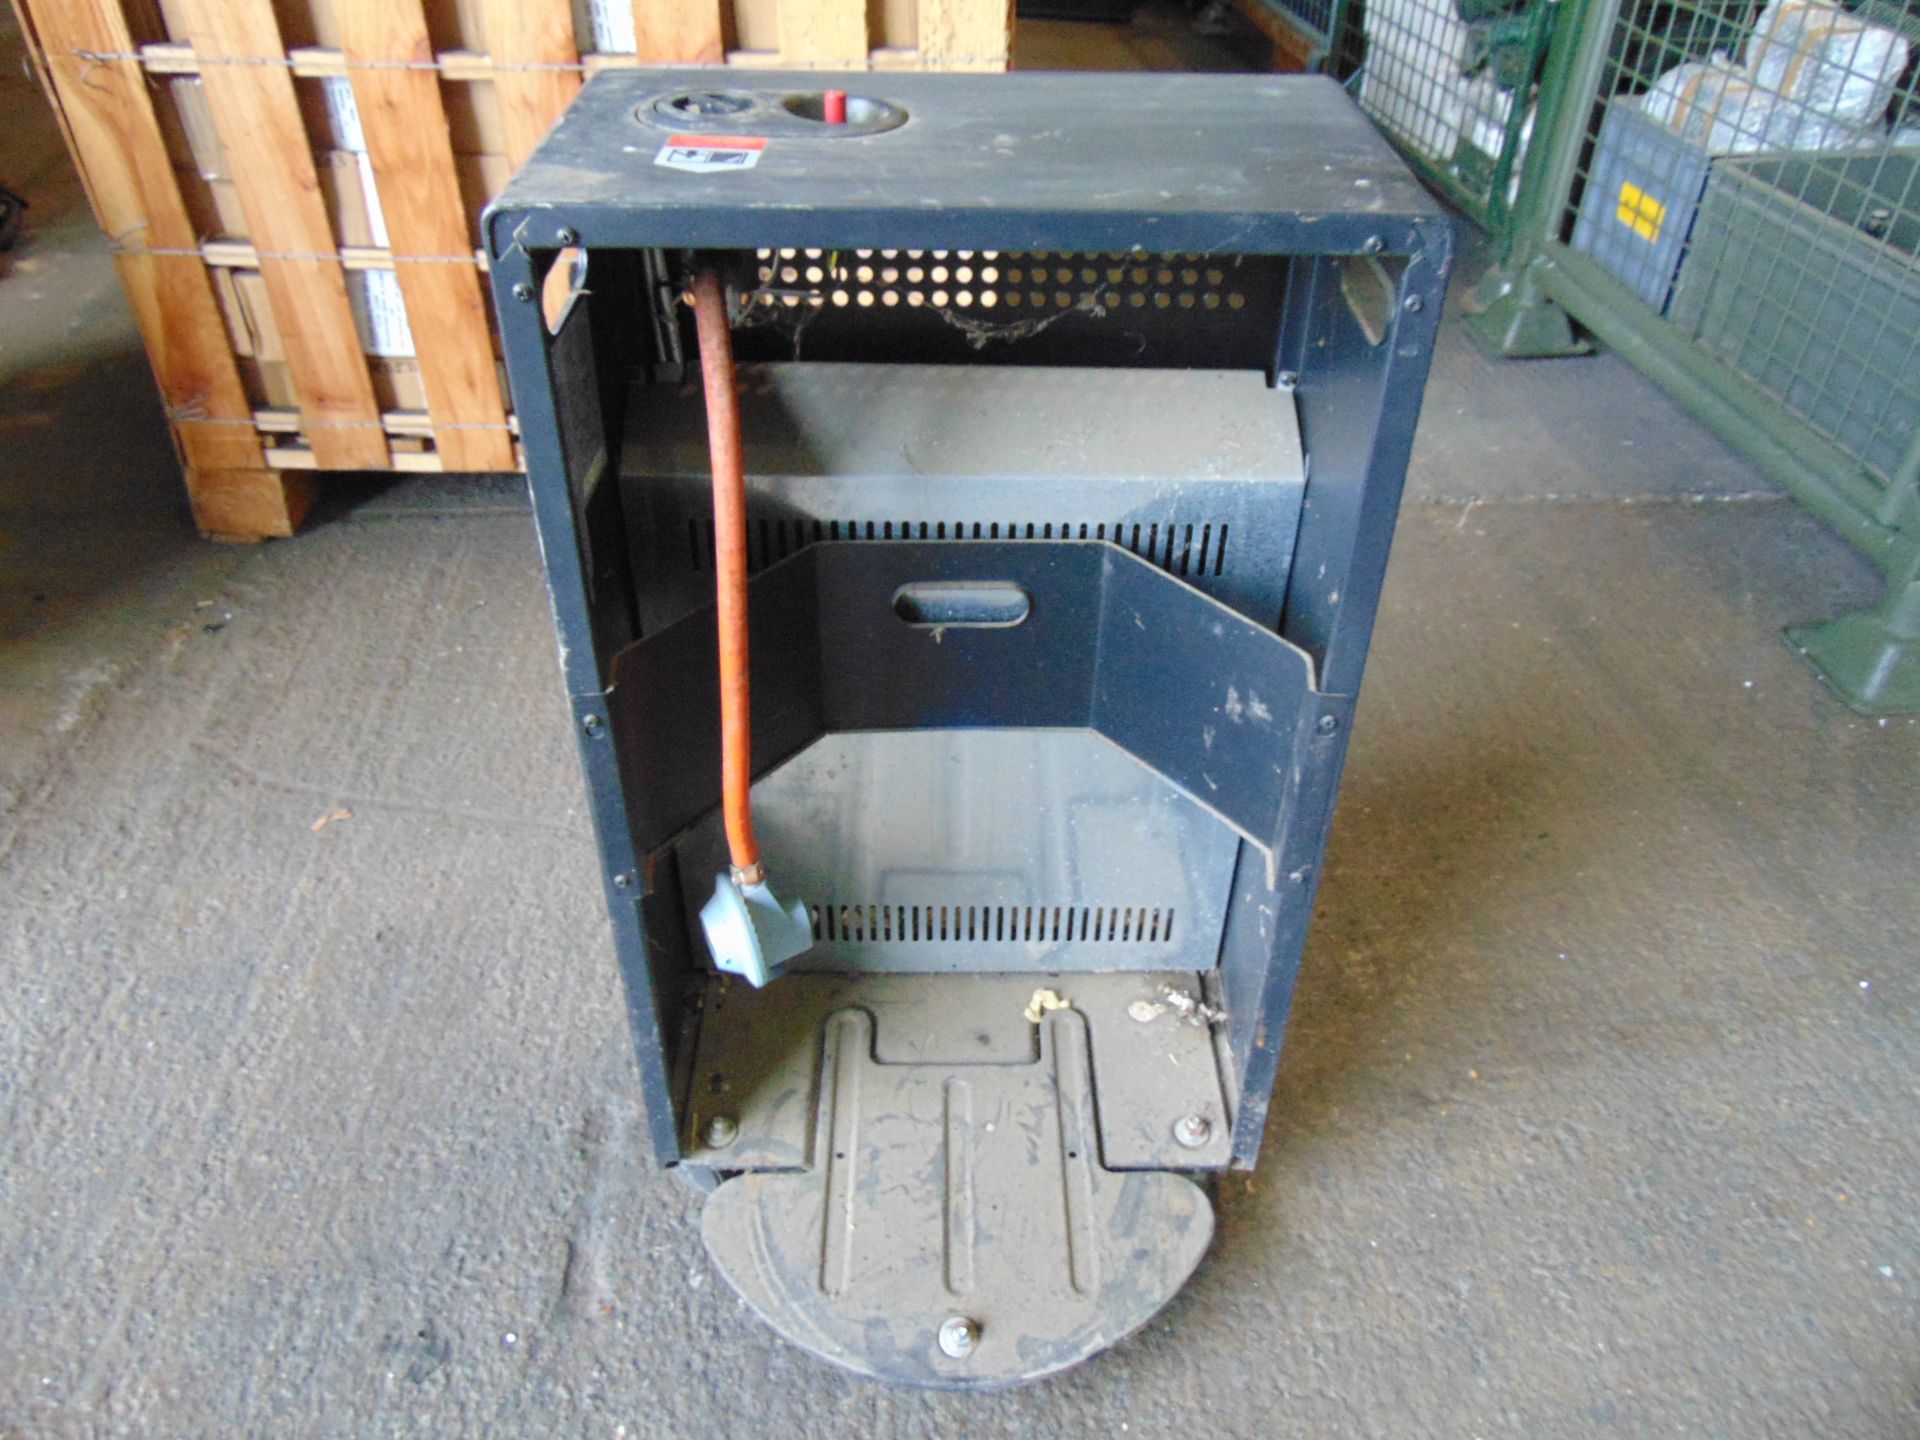 Kingavon PG150 4.2kW Portable Gas Heater - Image 4 of 6